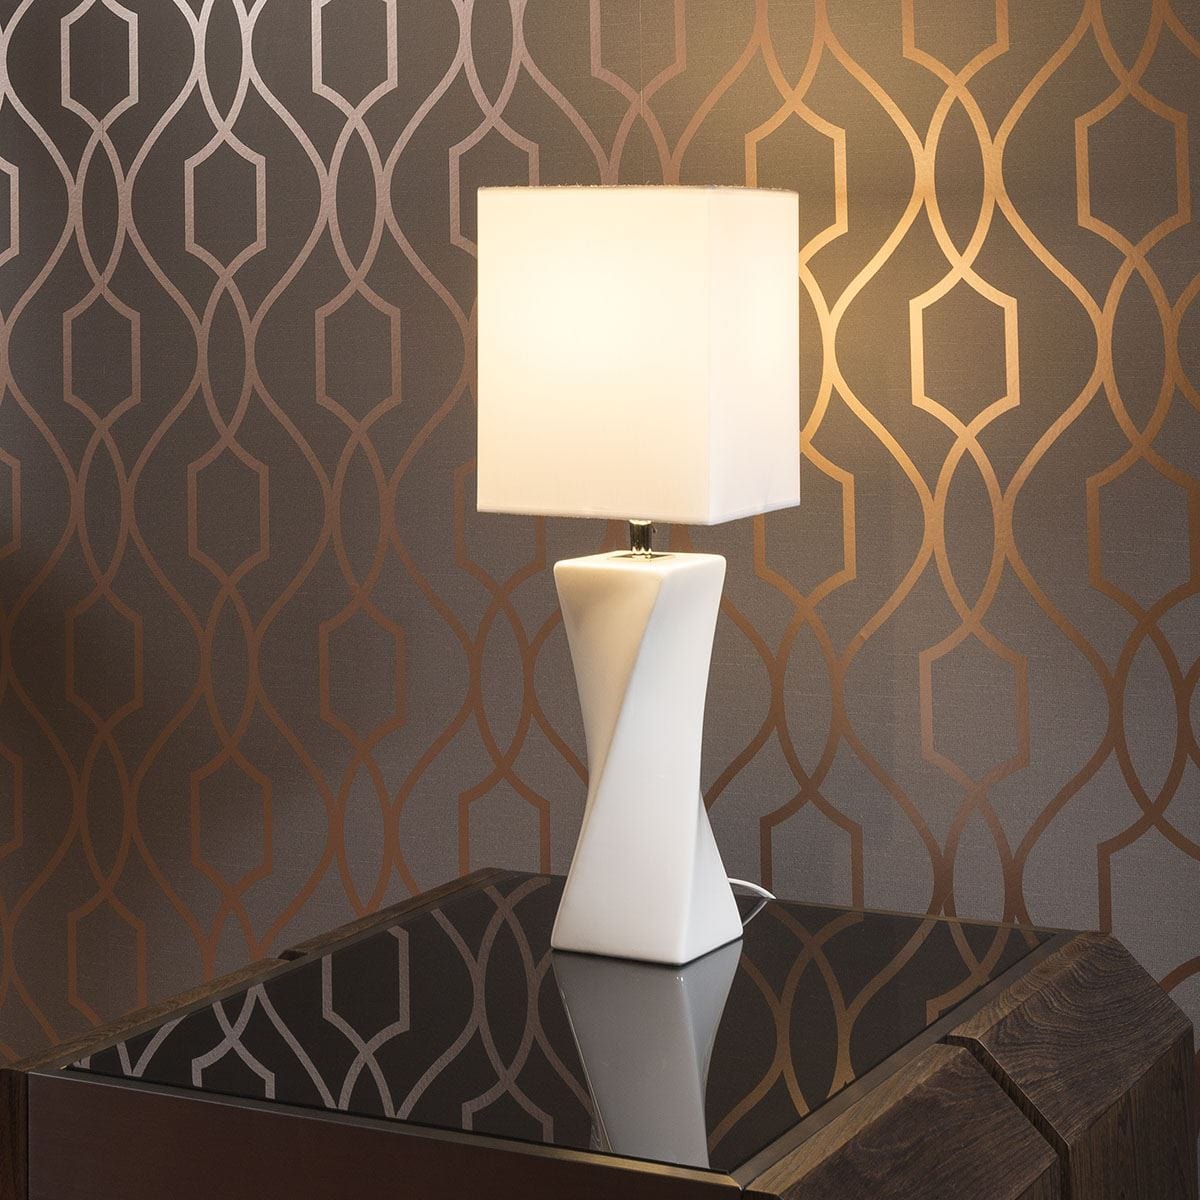 Quatropi Elegant Envy Twiss Table Lamp 520mm White Ceramic Cotton Shade 4403